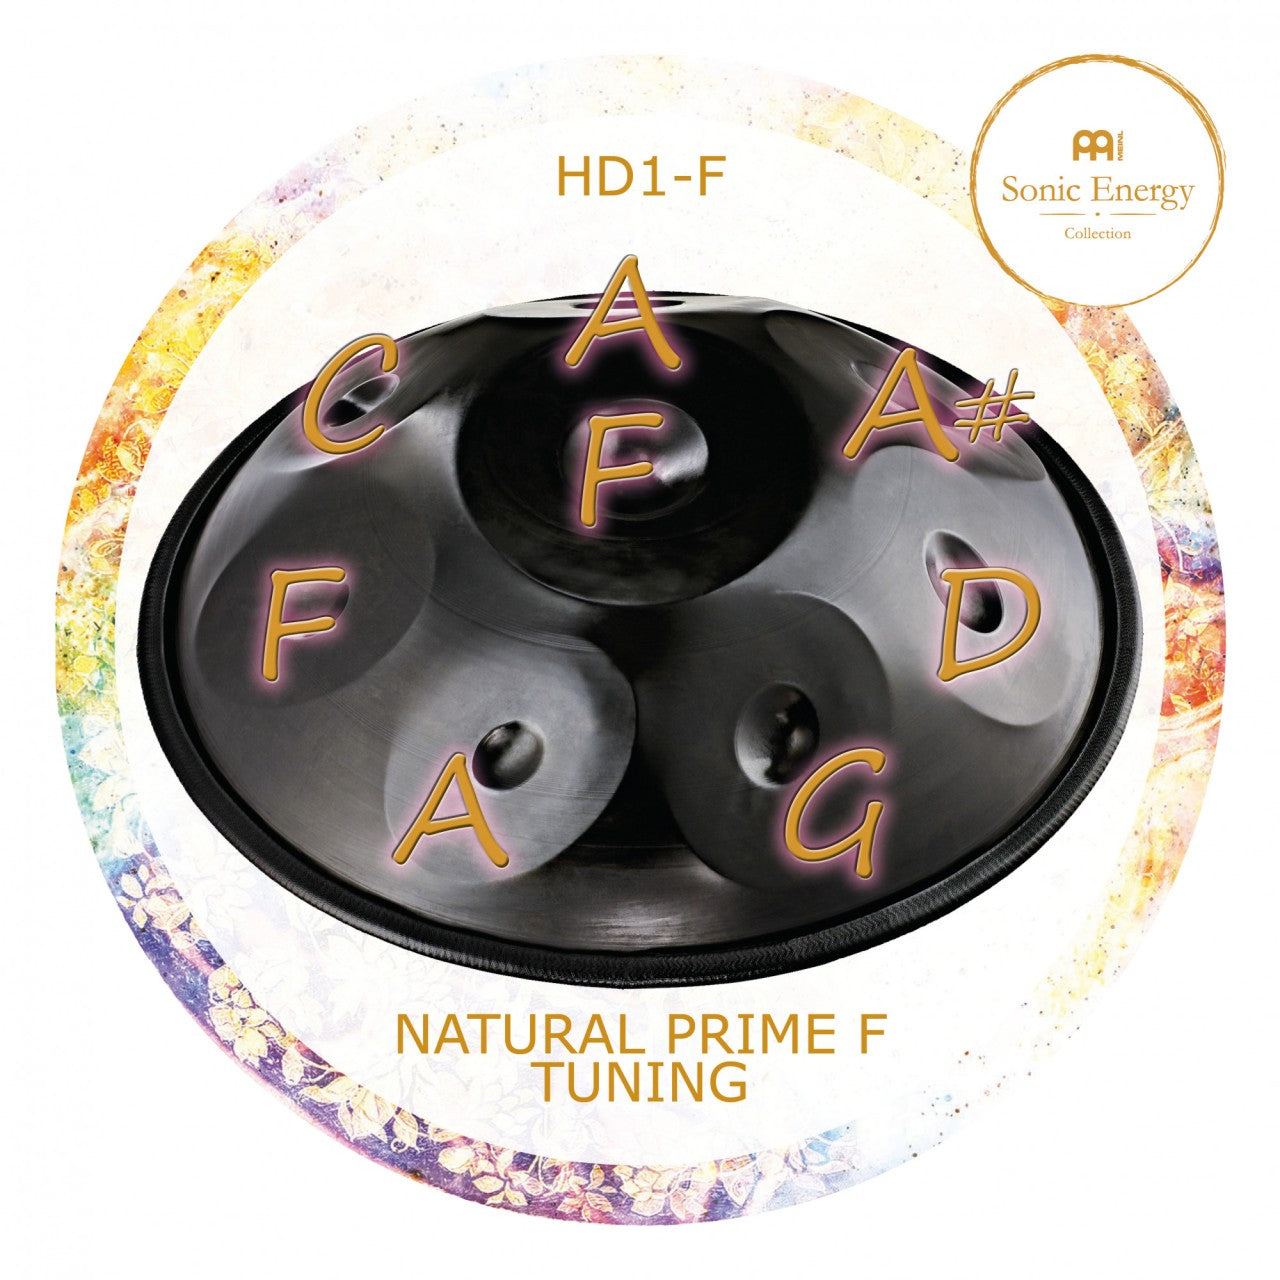 MEINL Sonic Energy Harmonic Art Handpan - Stimmung: F/ A, A#, C, D, F, G, A (HD1-F)